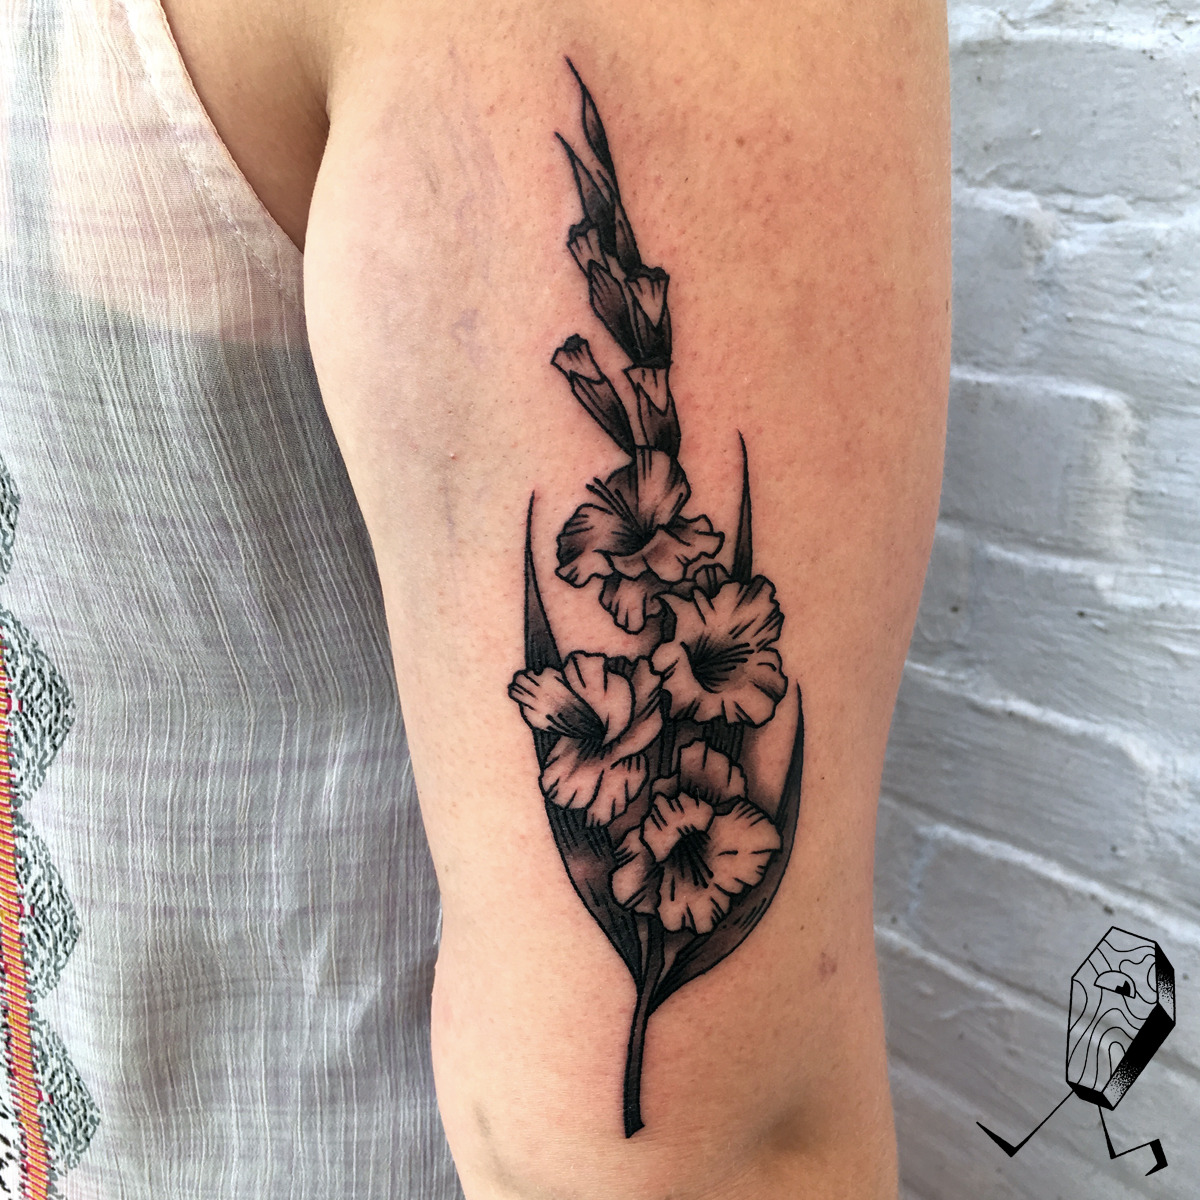 maureen orrissim - Portland Tattoo Artist ✨ on Instagram: 